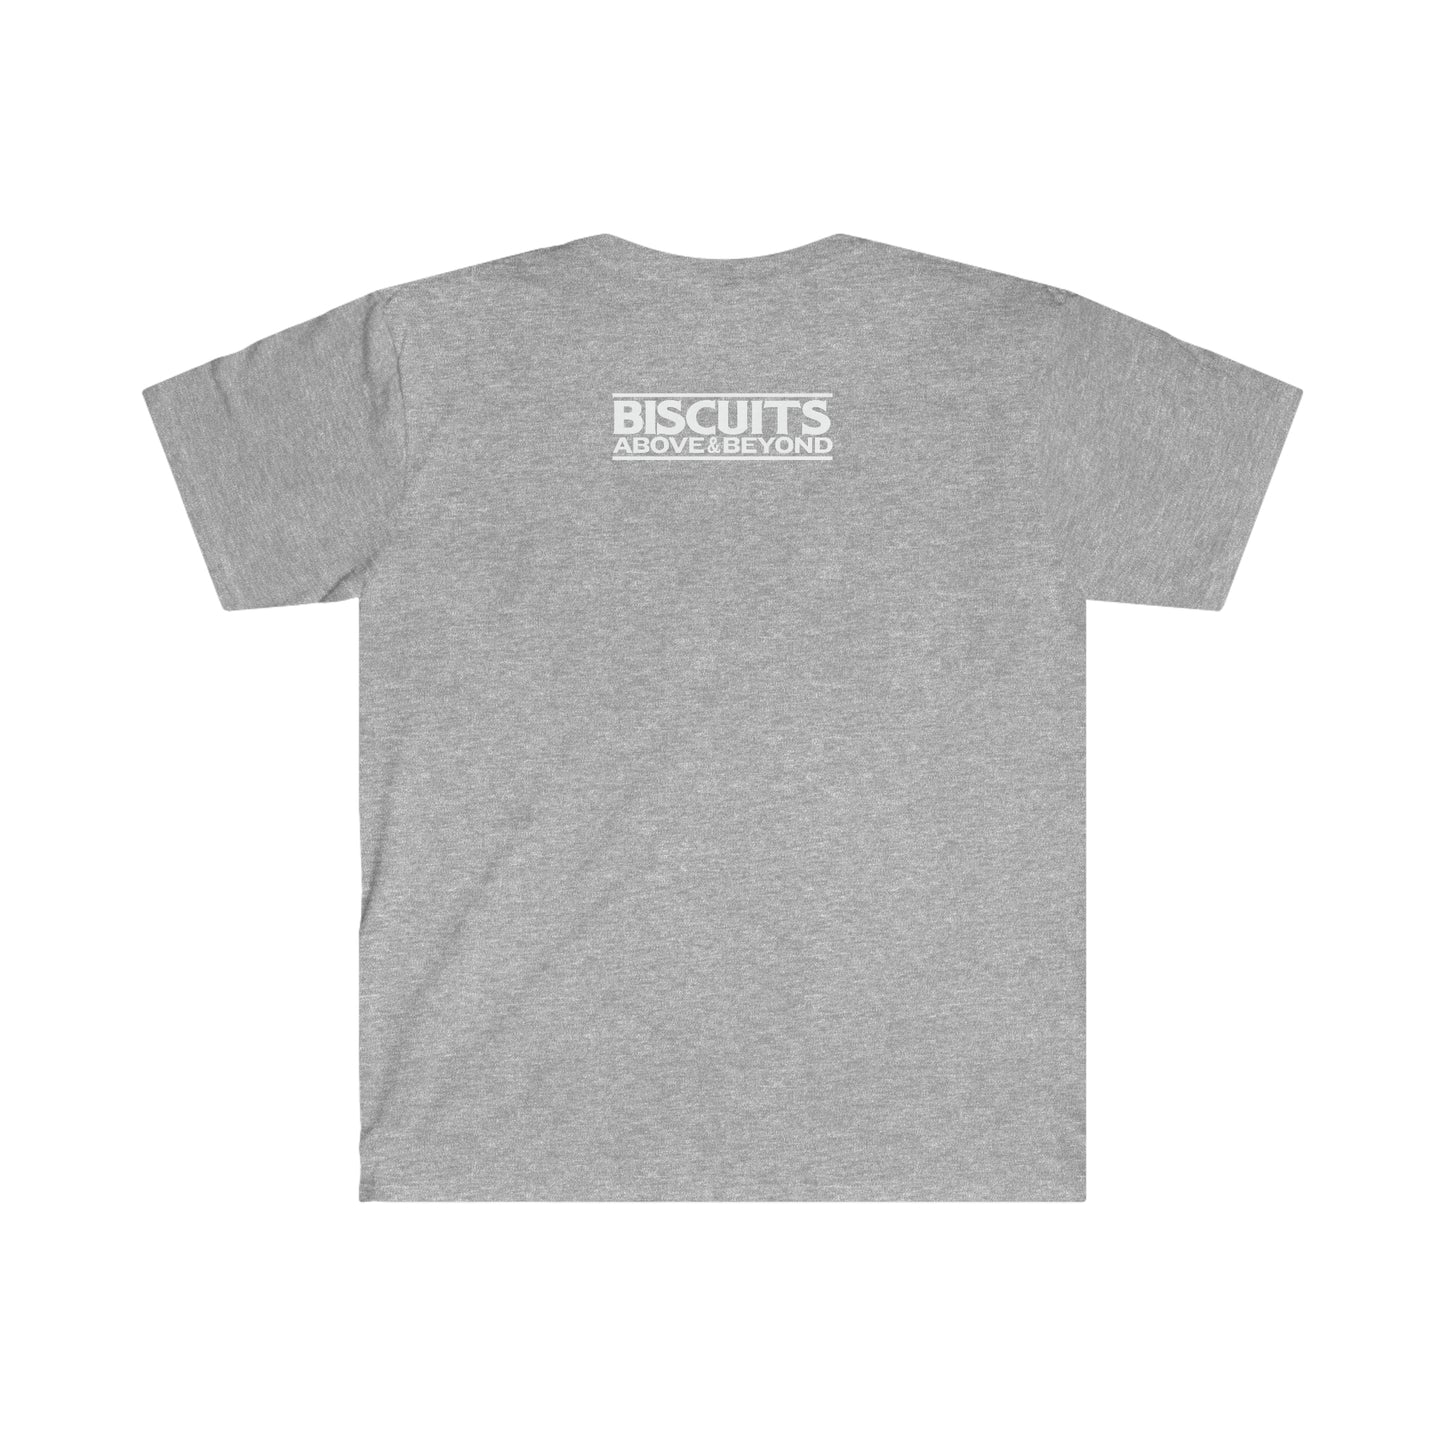 Rise - Unisex Softstyle T-Shirt - Sport Grey